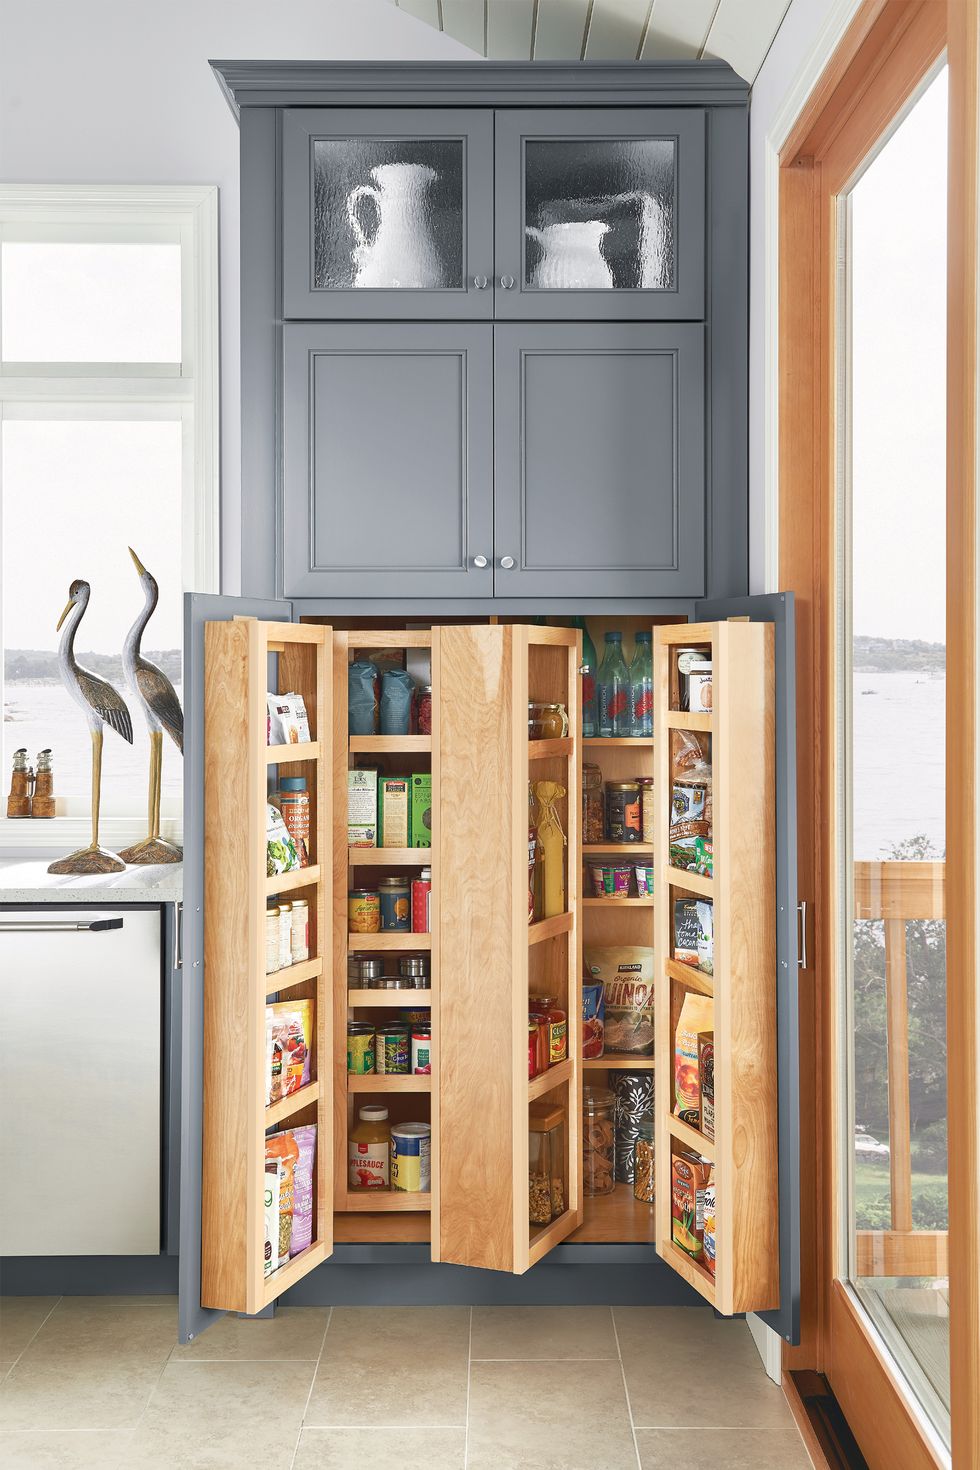 kraftmaid pantry cabinets